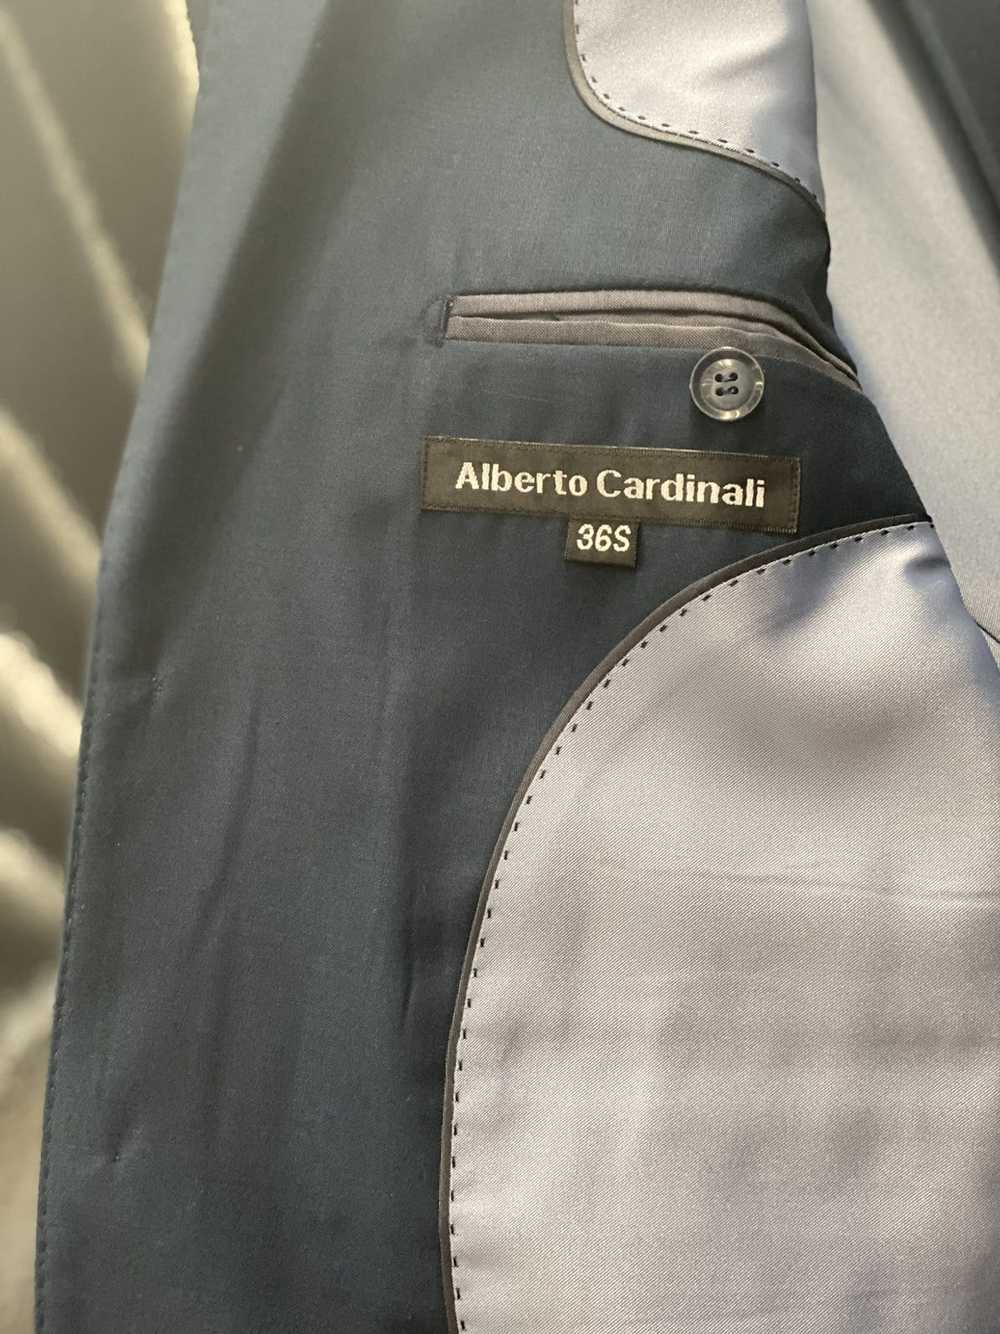 Cardinali Alberto Cardinali Suit - image 2